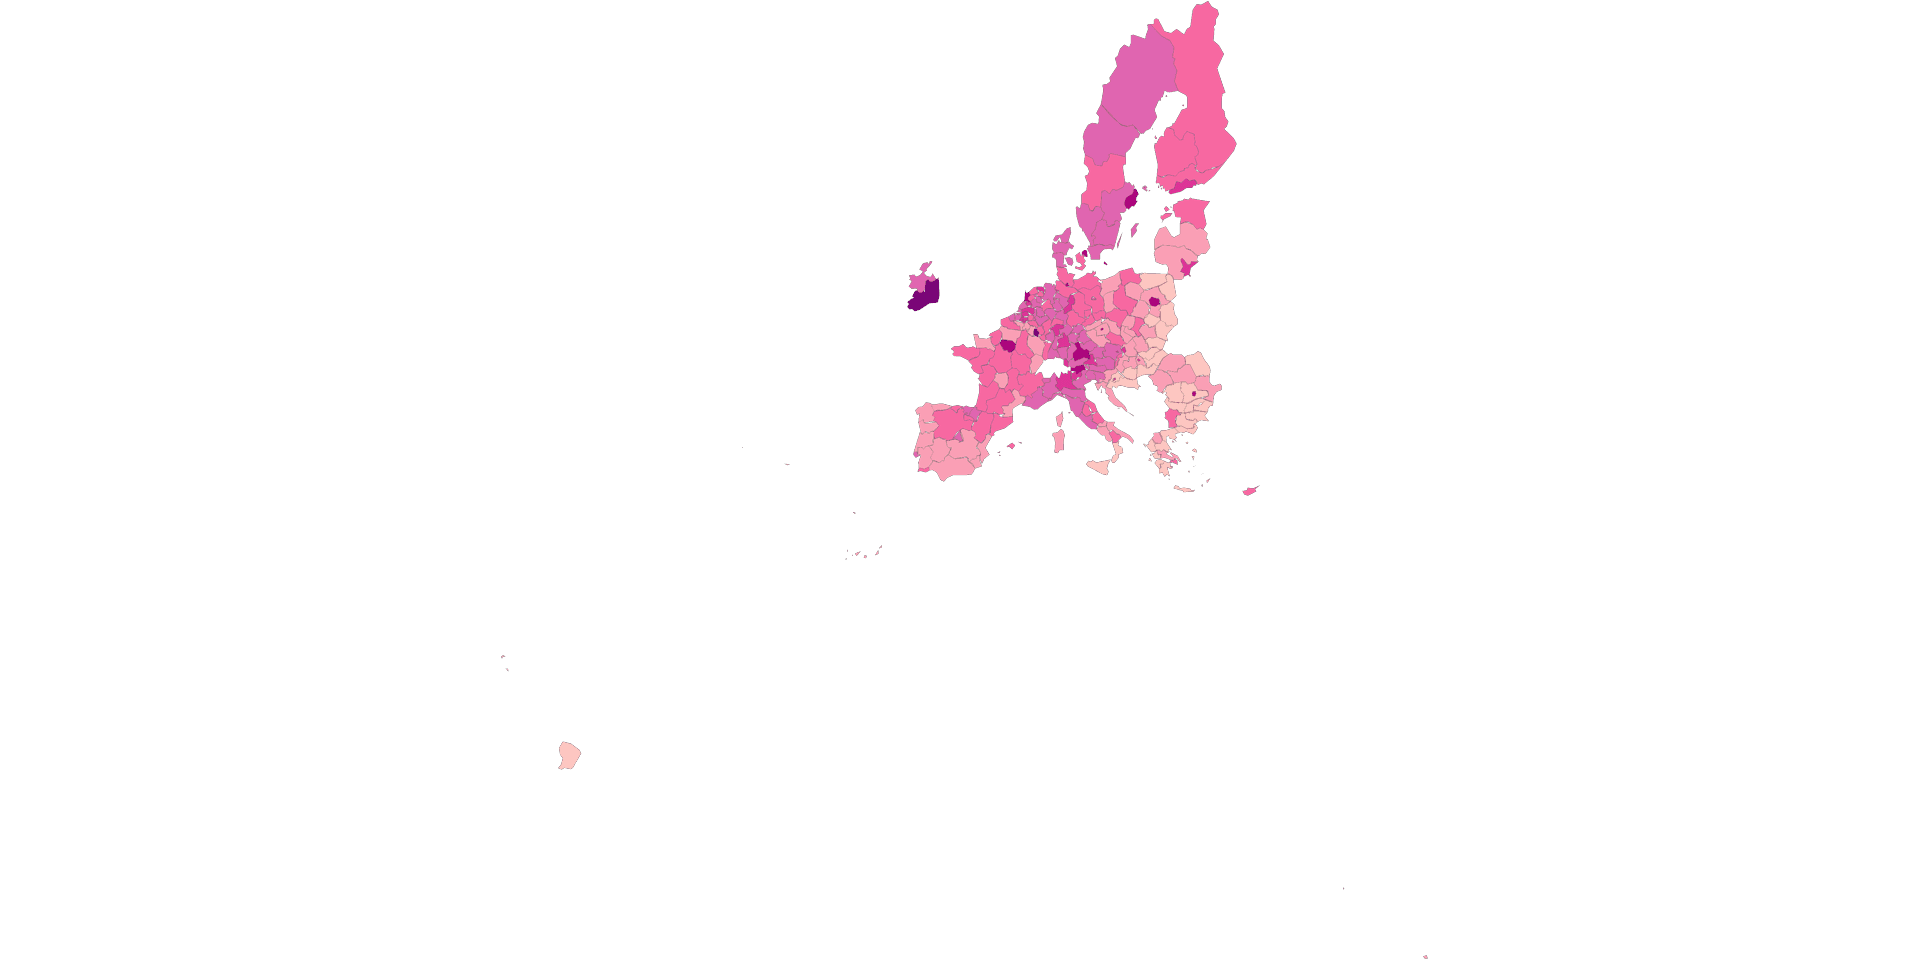 GDP in EU Regions in 2022